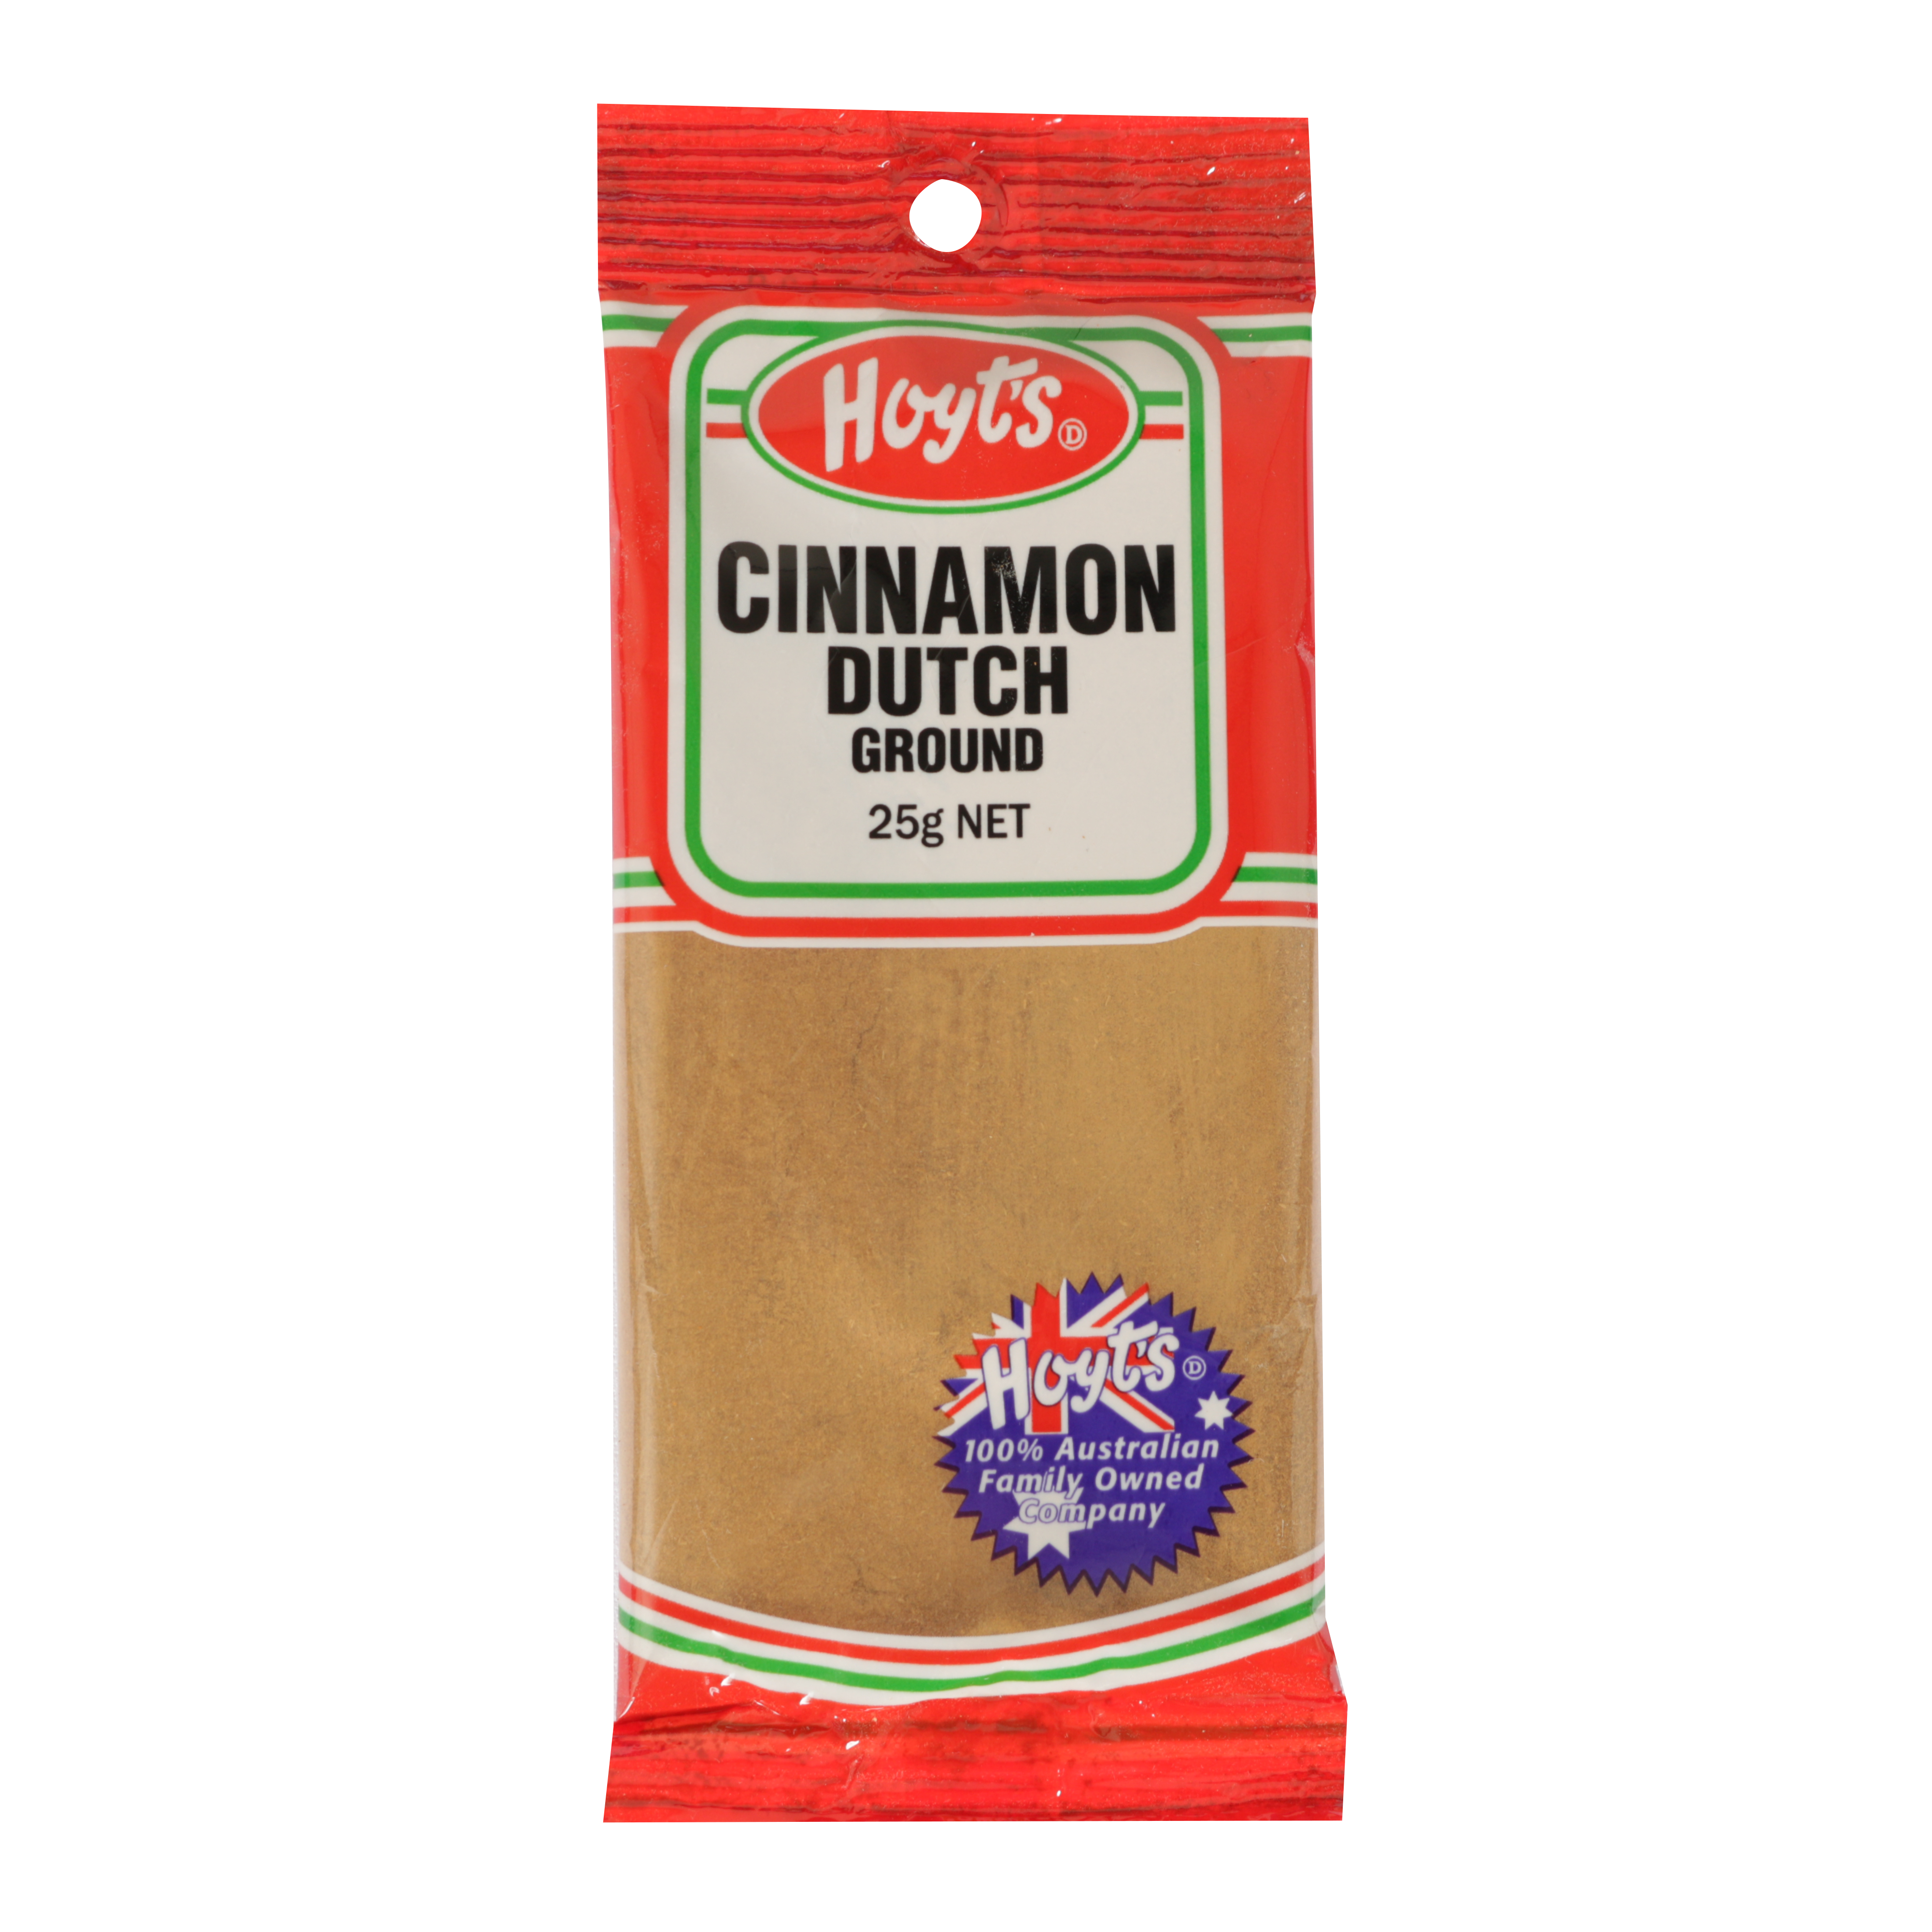 Hoyts Cinnamon Ground Dutch 25g